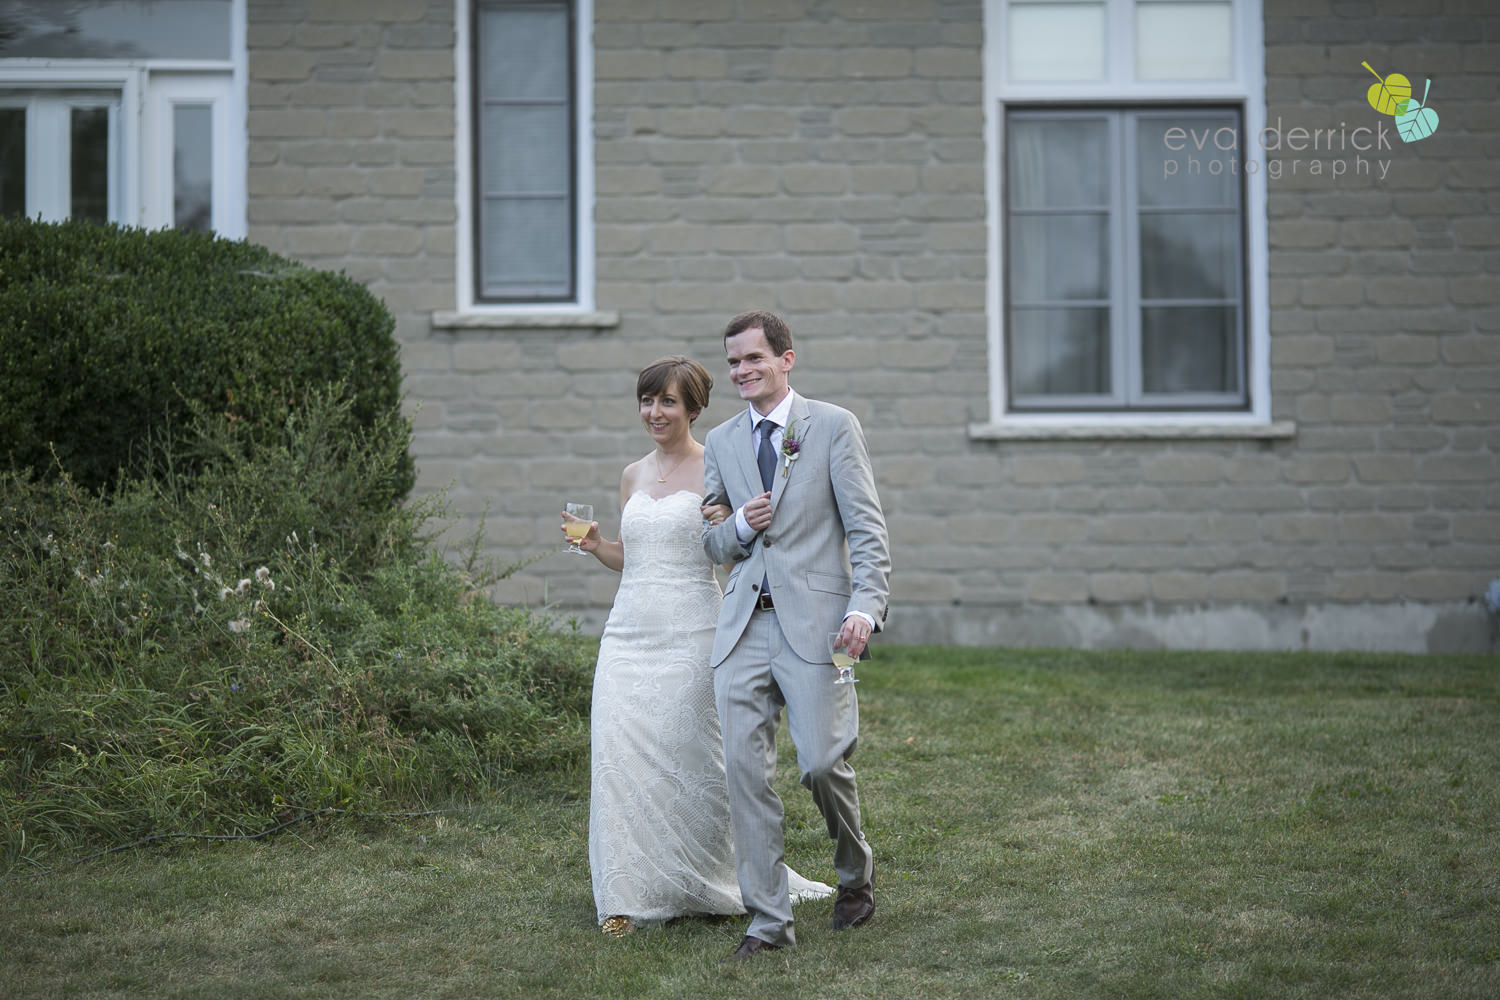 Organized-Crime-Winery-Wedding-Niagara-Wedding-photography-by-Eva-Derrick-Photography-041.JPG